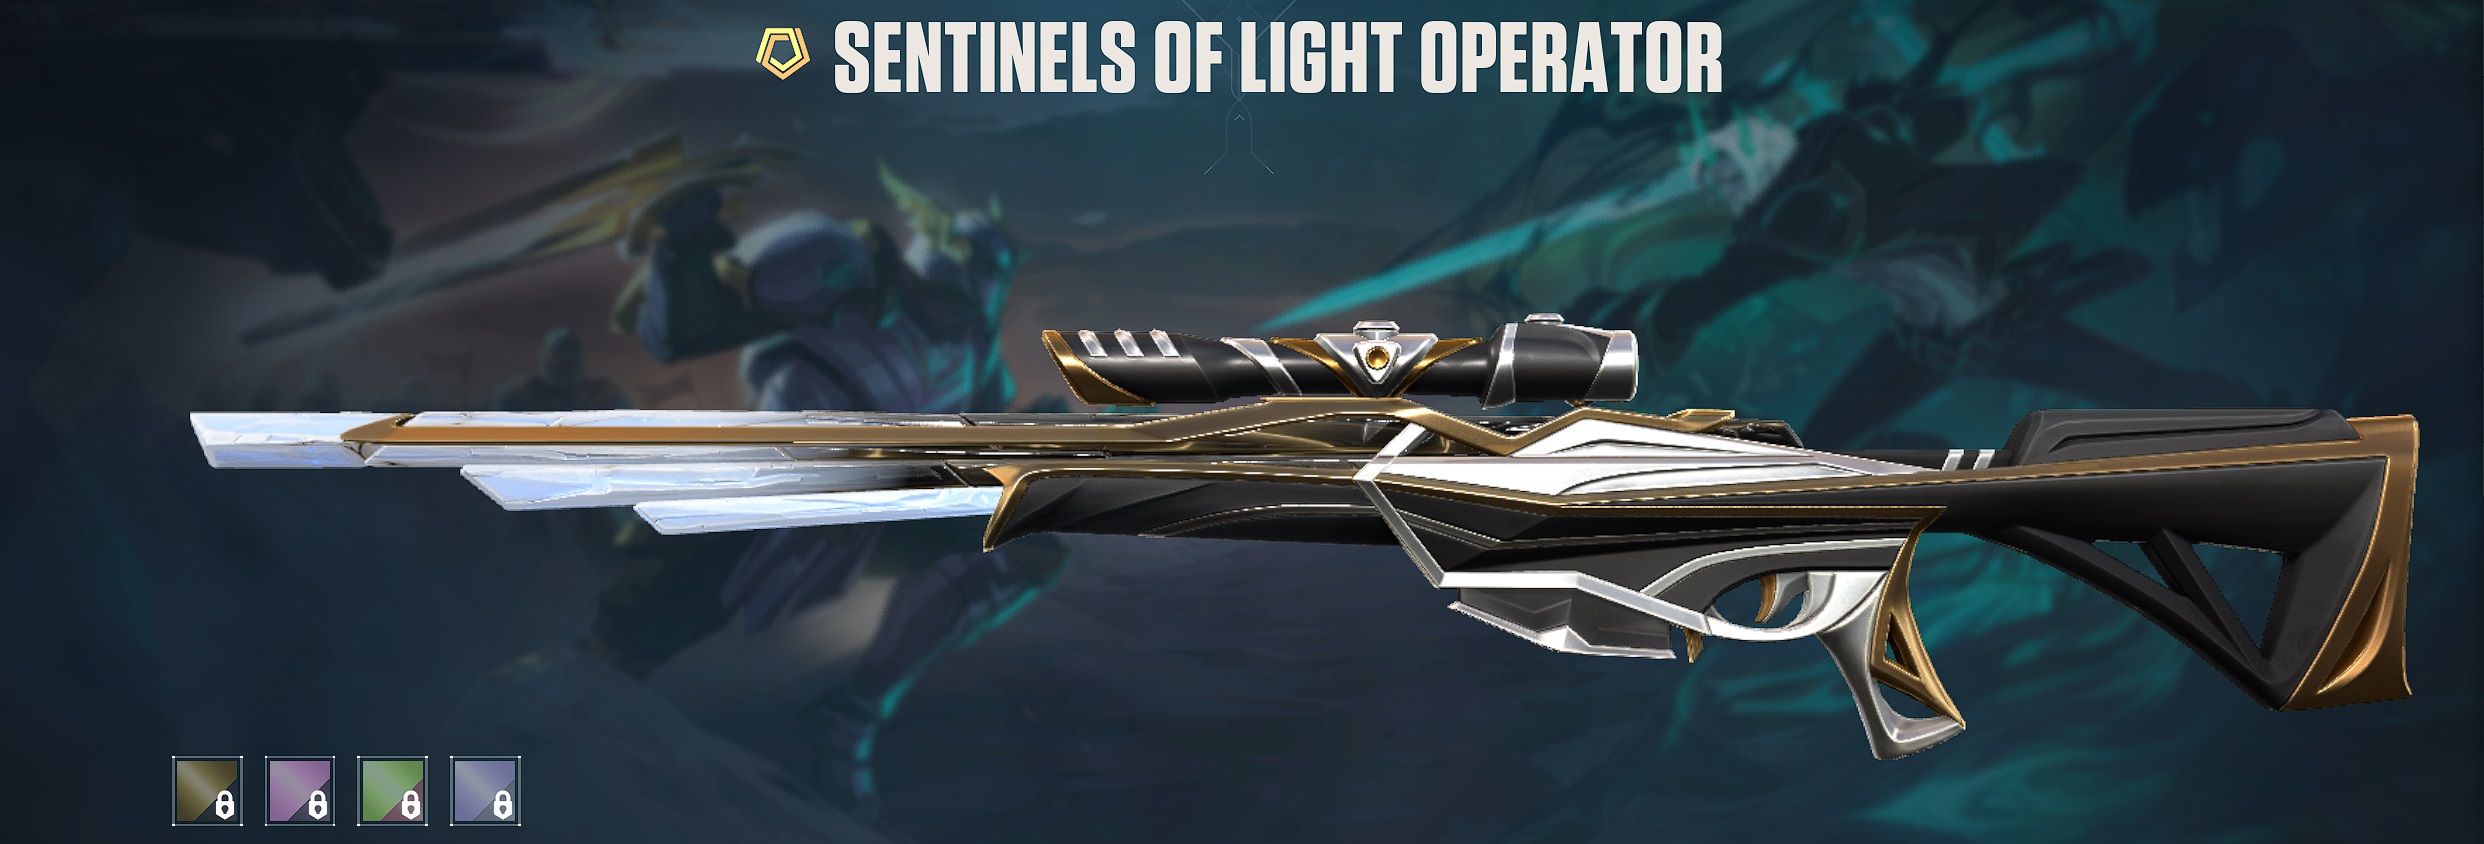 Sentinels of Light Operator - screenshot